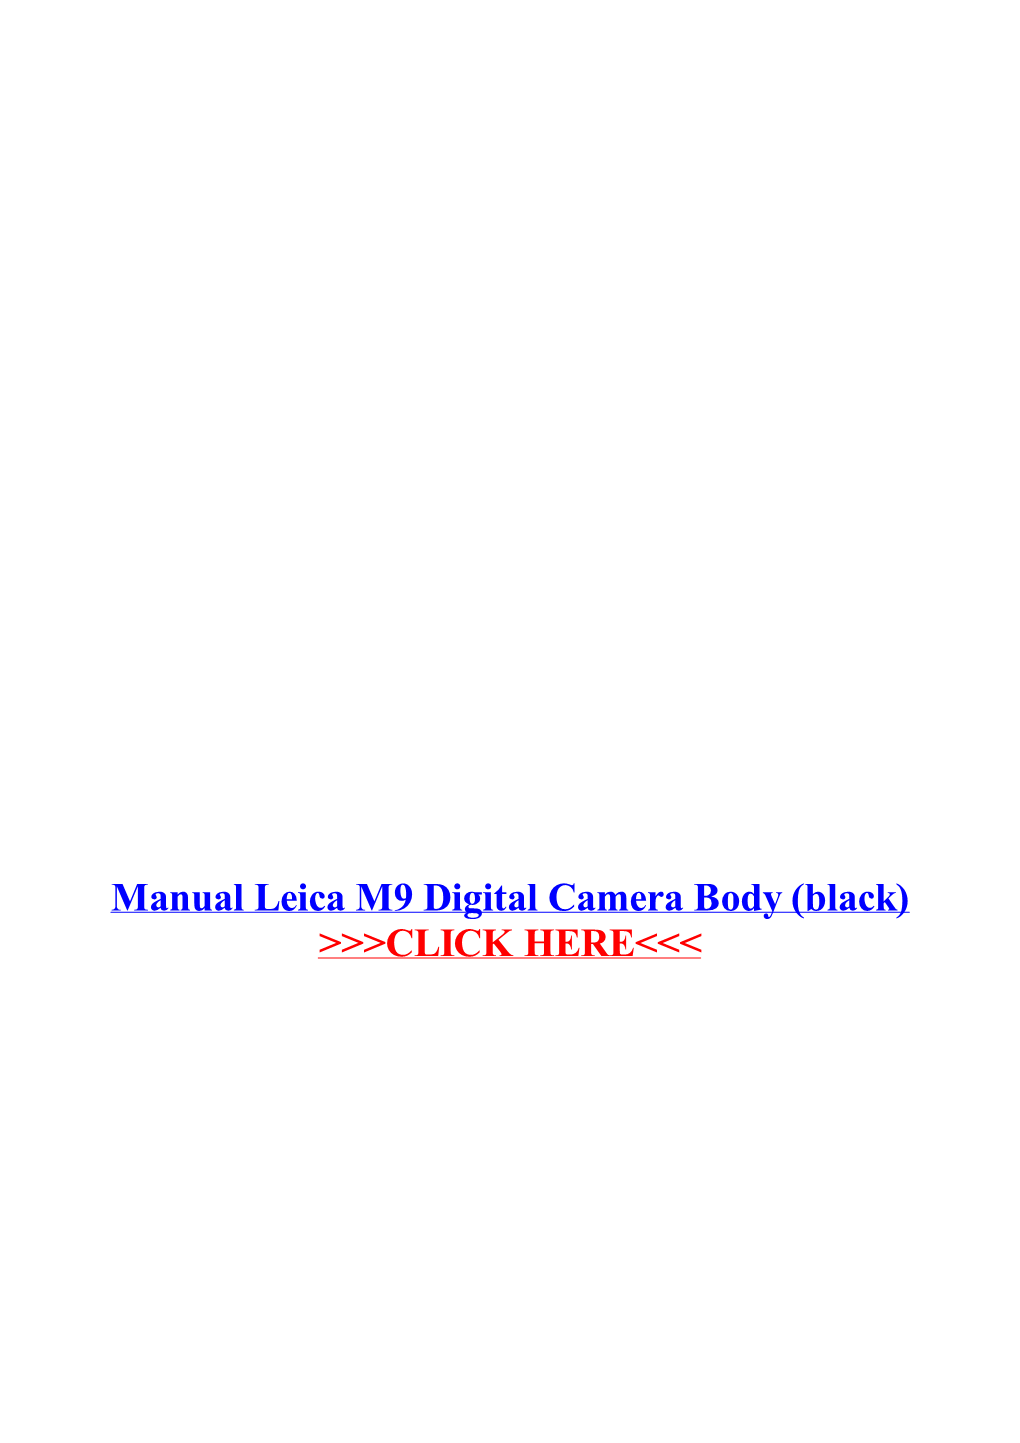 Manual Leica M9 Digital Camera Body (Black)